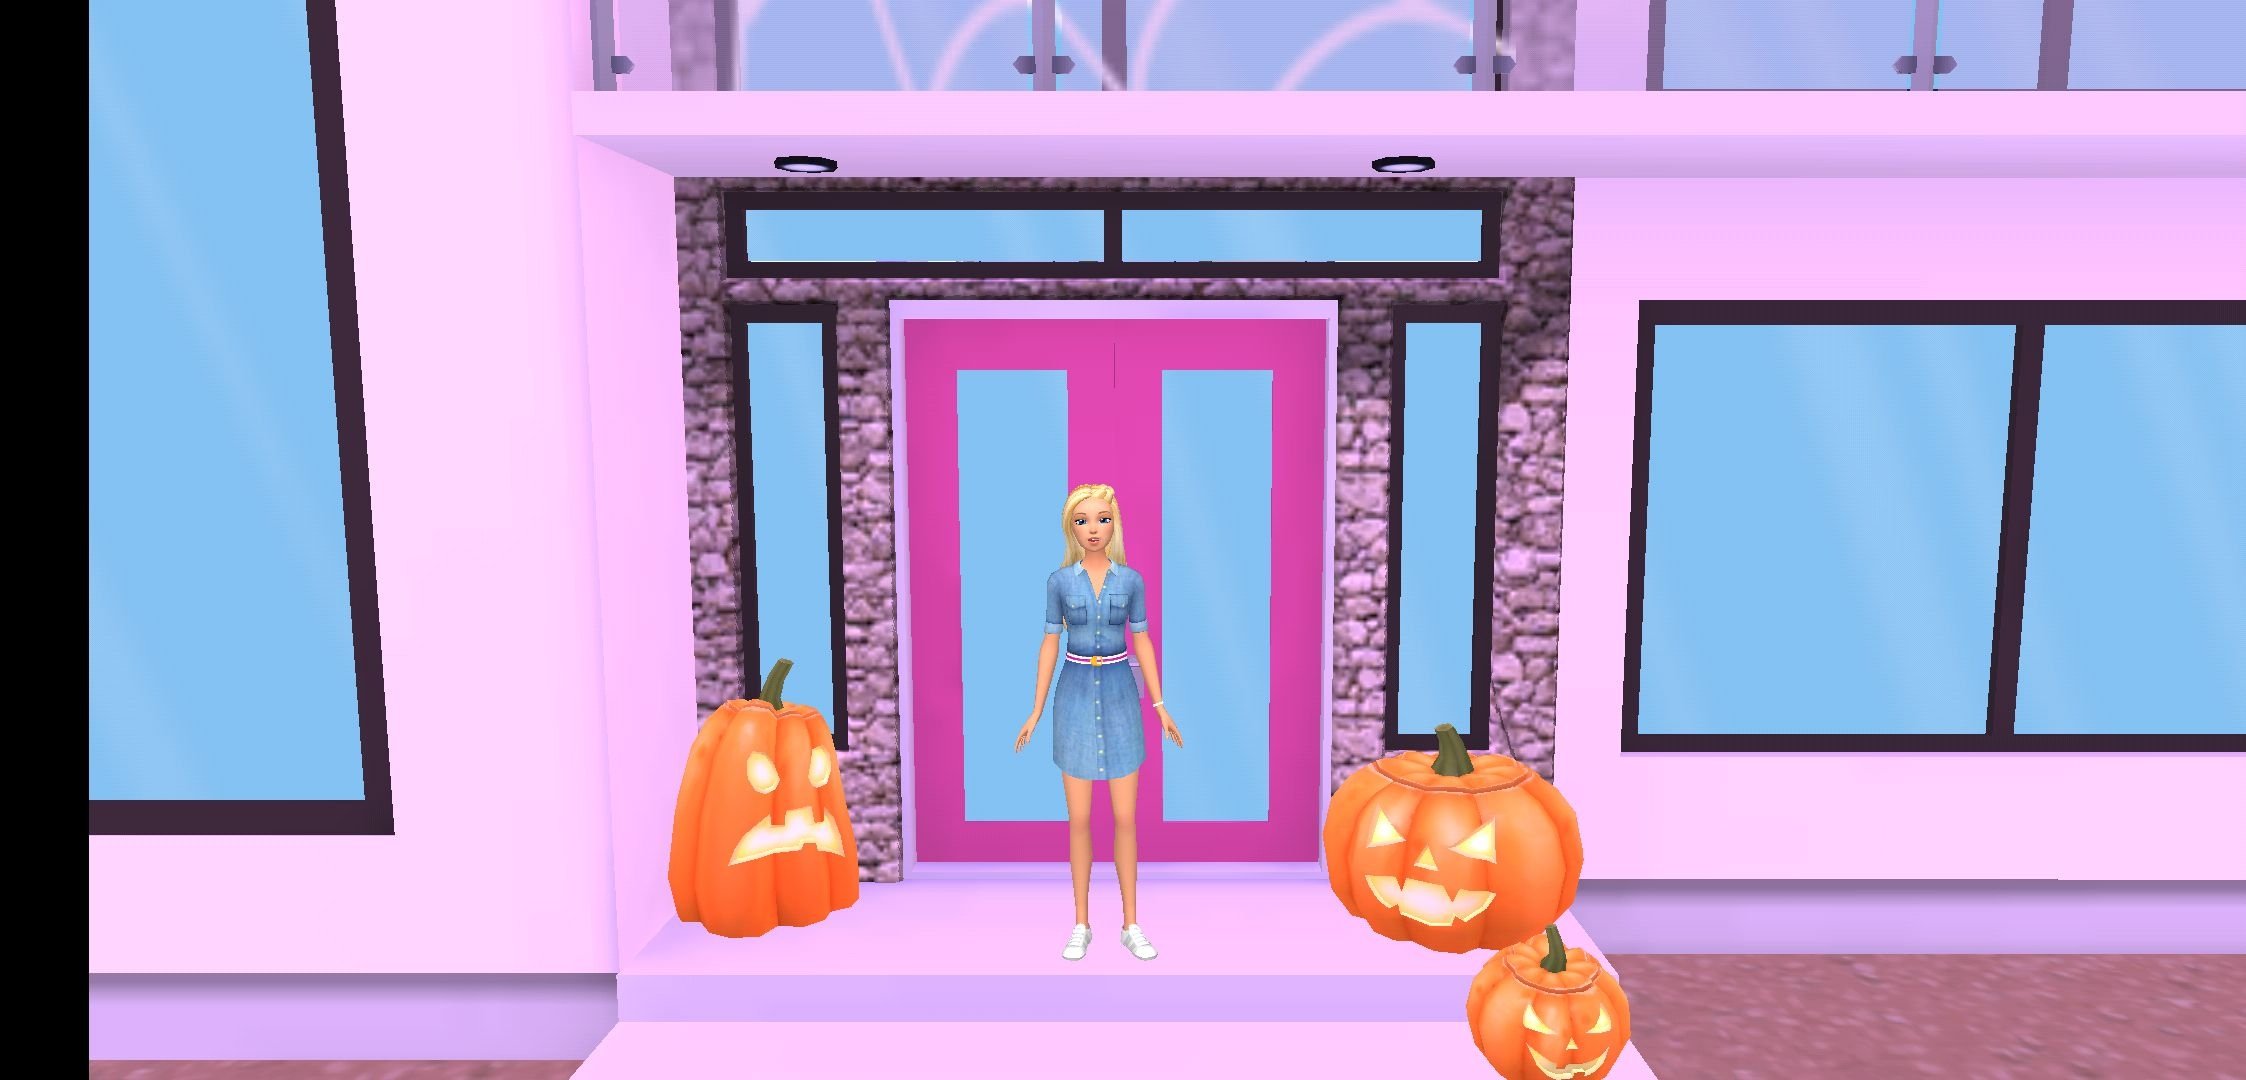 Barbie Dreamhouse Adventures (4.0) download no Android apk